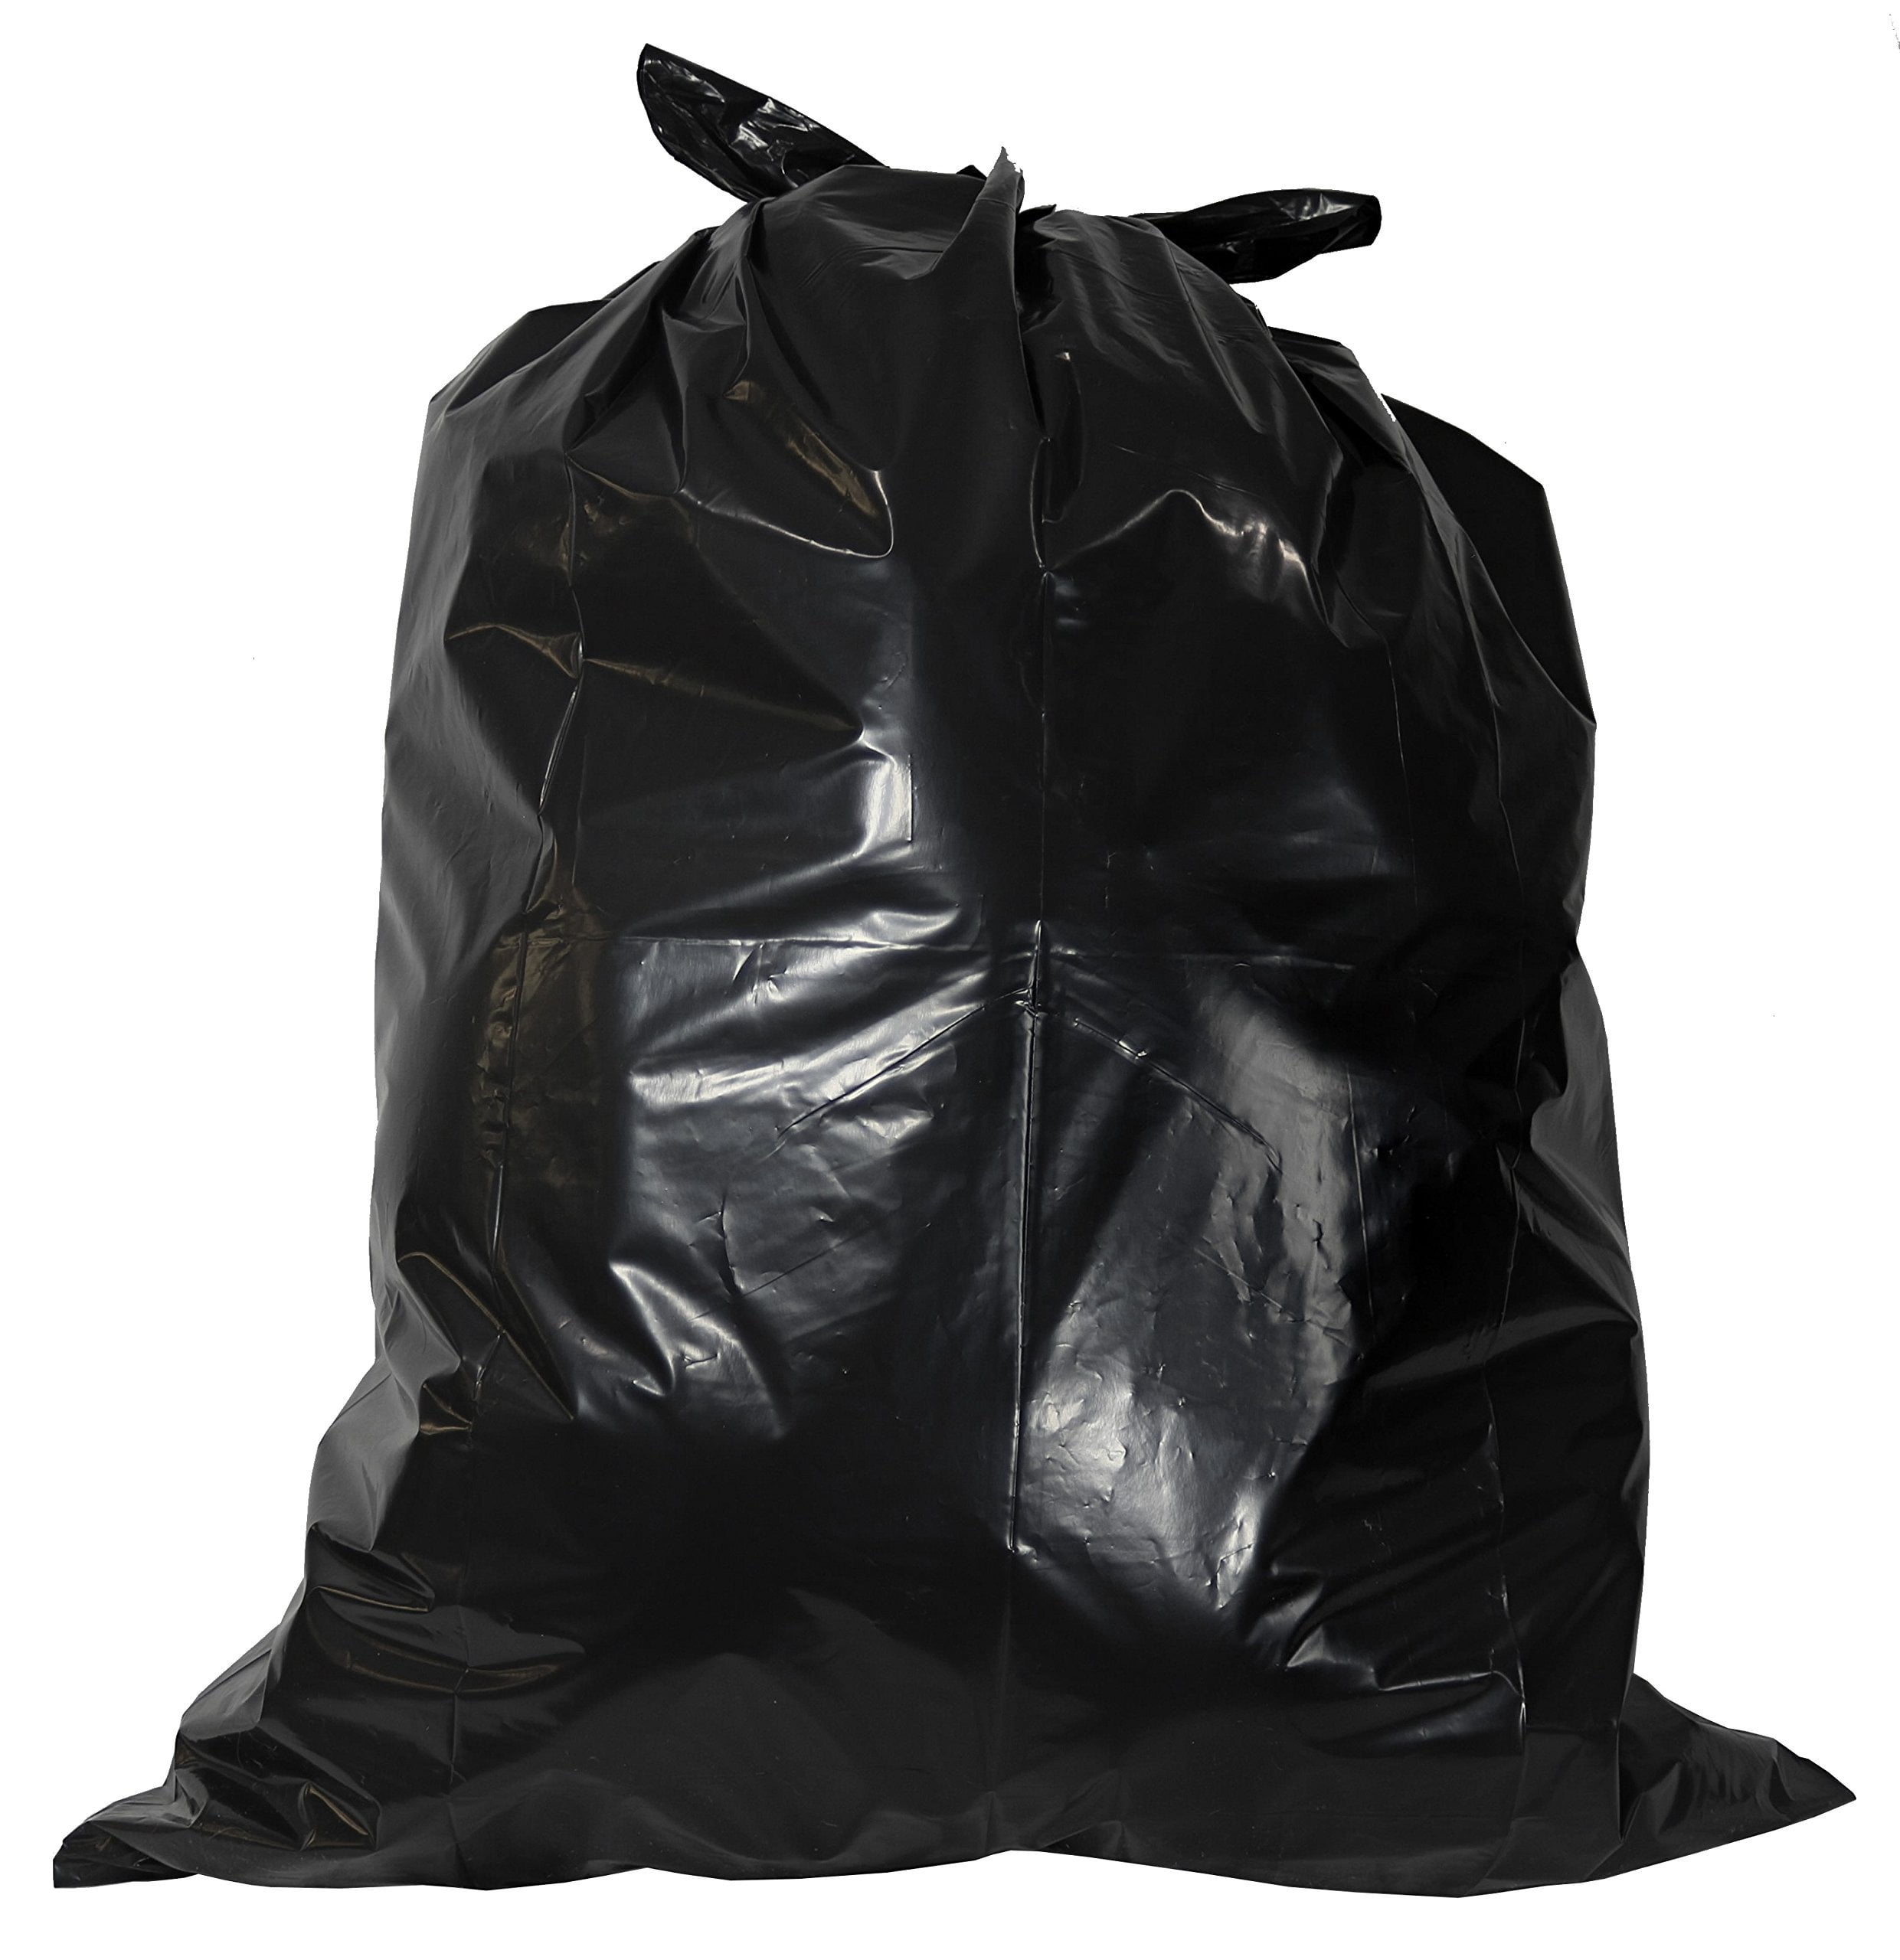 JobSmart 42 gal. Black Heavy-Duty Contractor Trash Bags, 24 Ct.